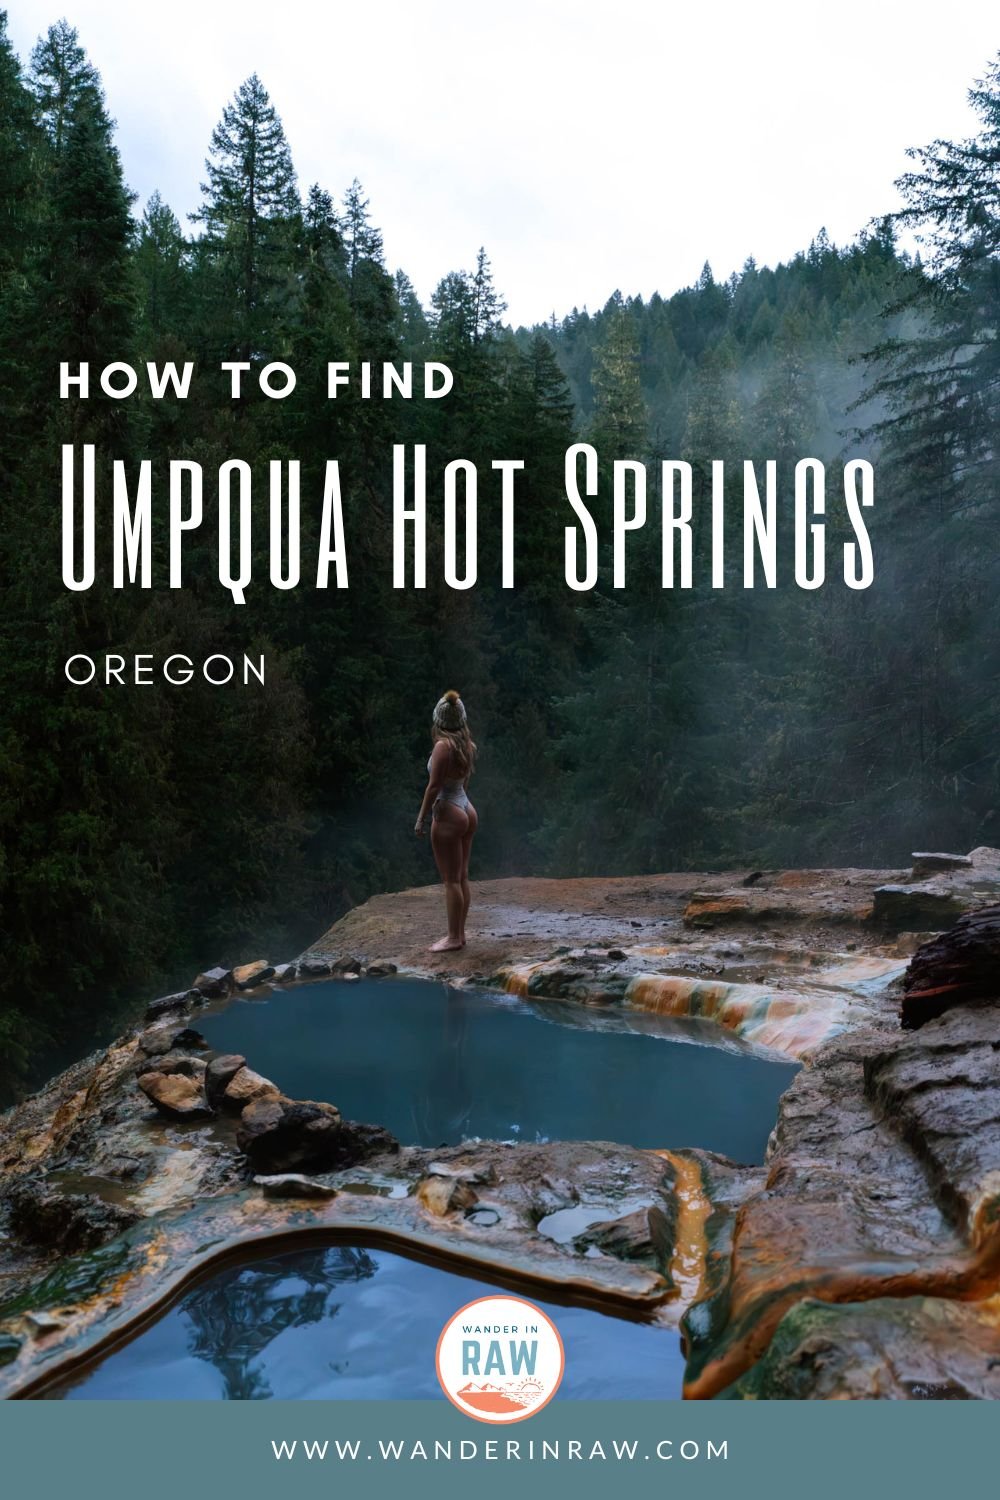 How to Find Umpqua Hot Springs in Oregon